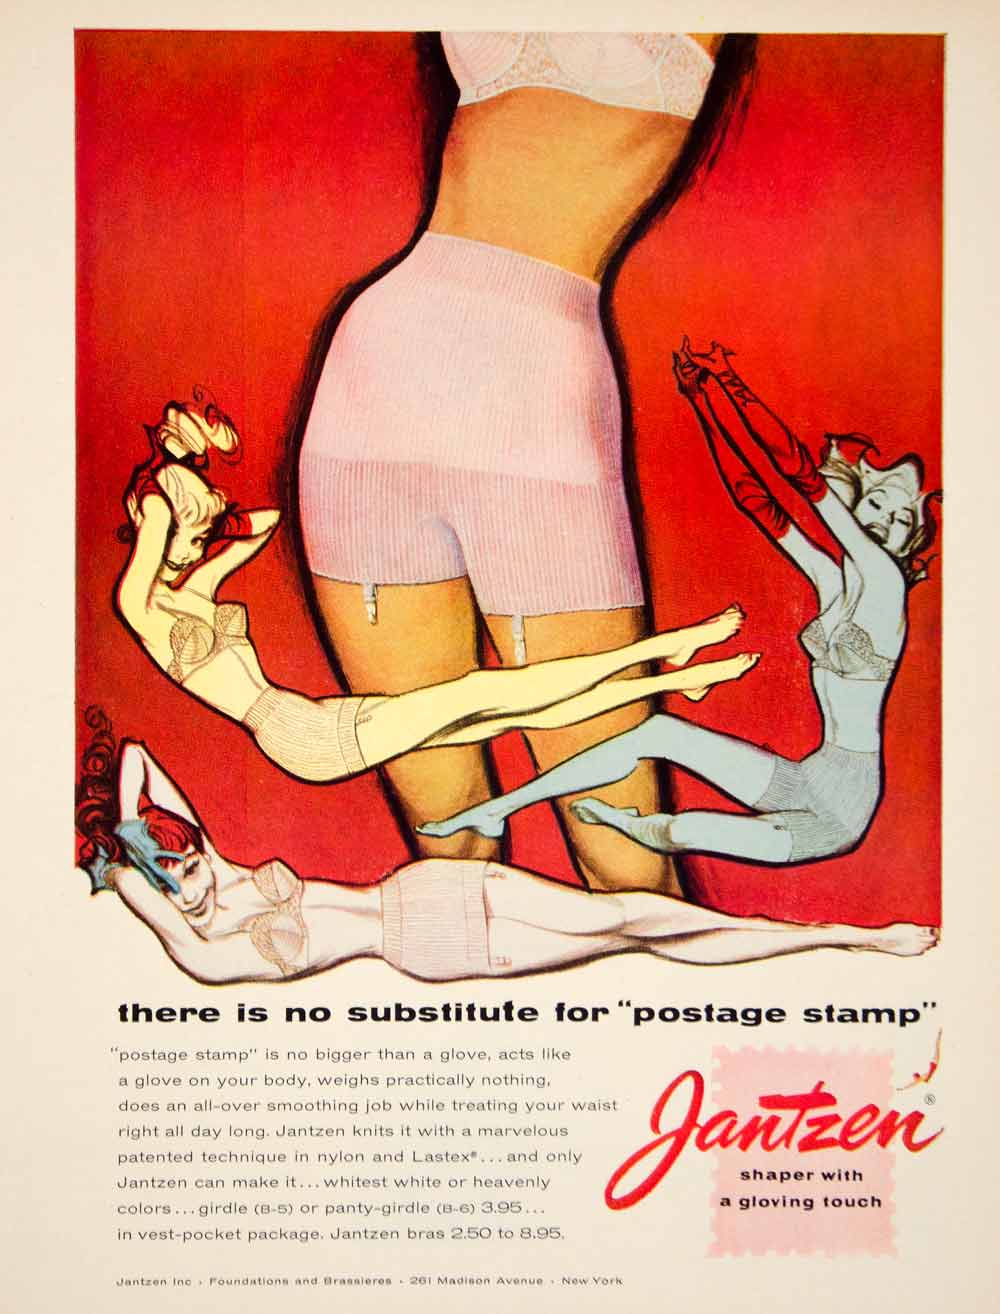 1969 Ad Vintage Grossard Artemis Lingerie Bra Brassiere Panty Girdle S –  Period Paper Historic Art LLC